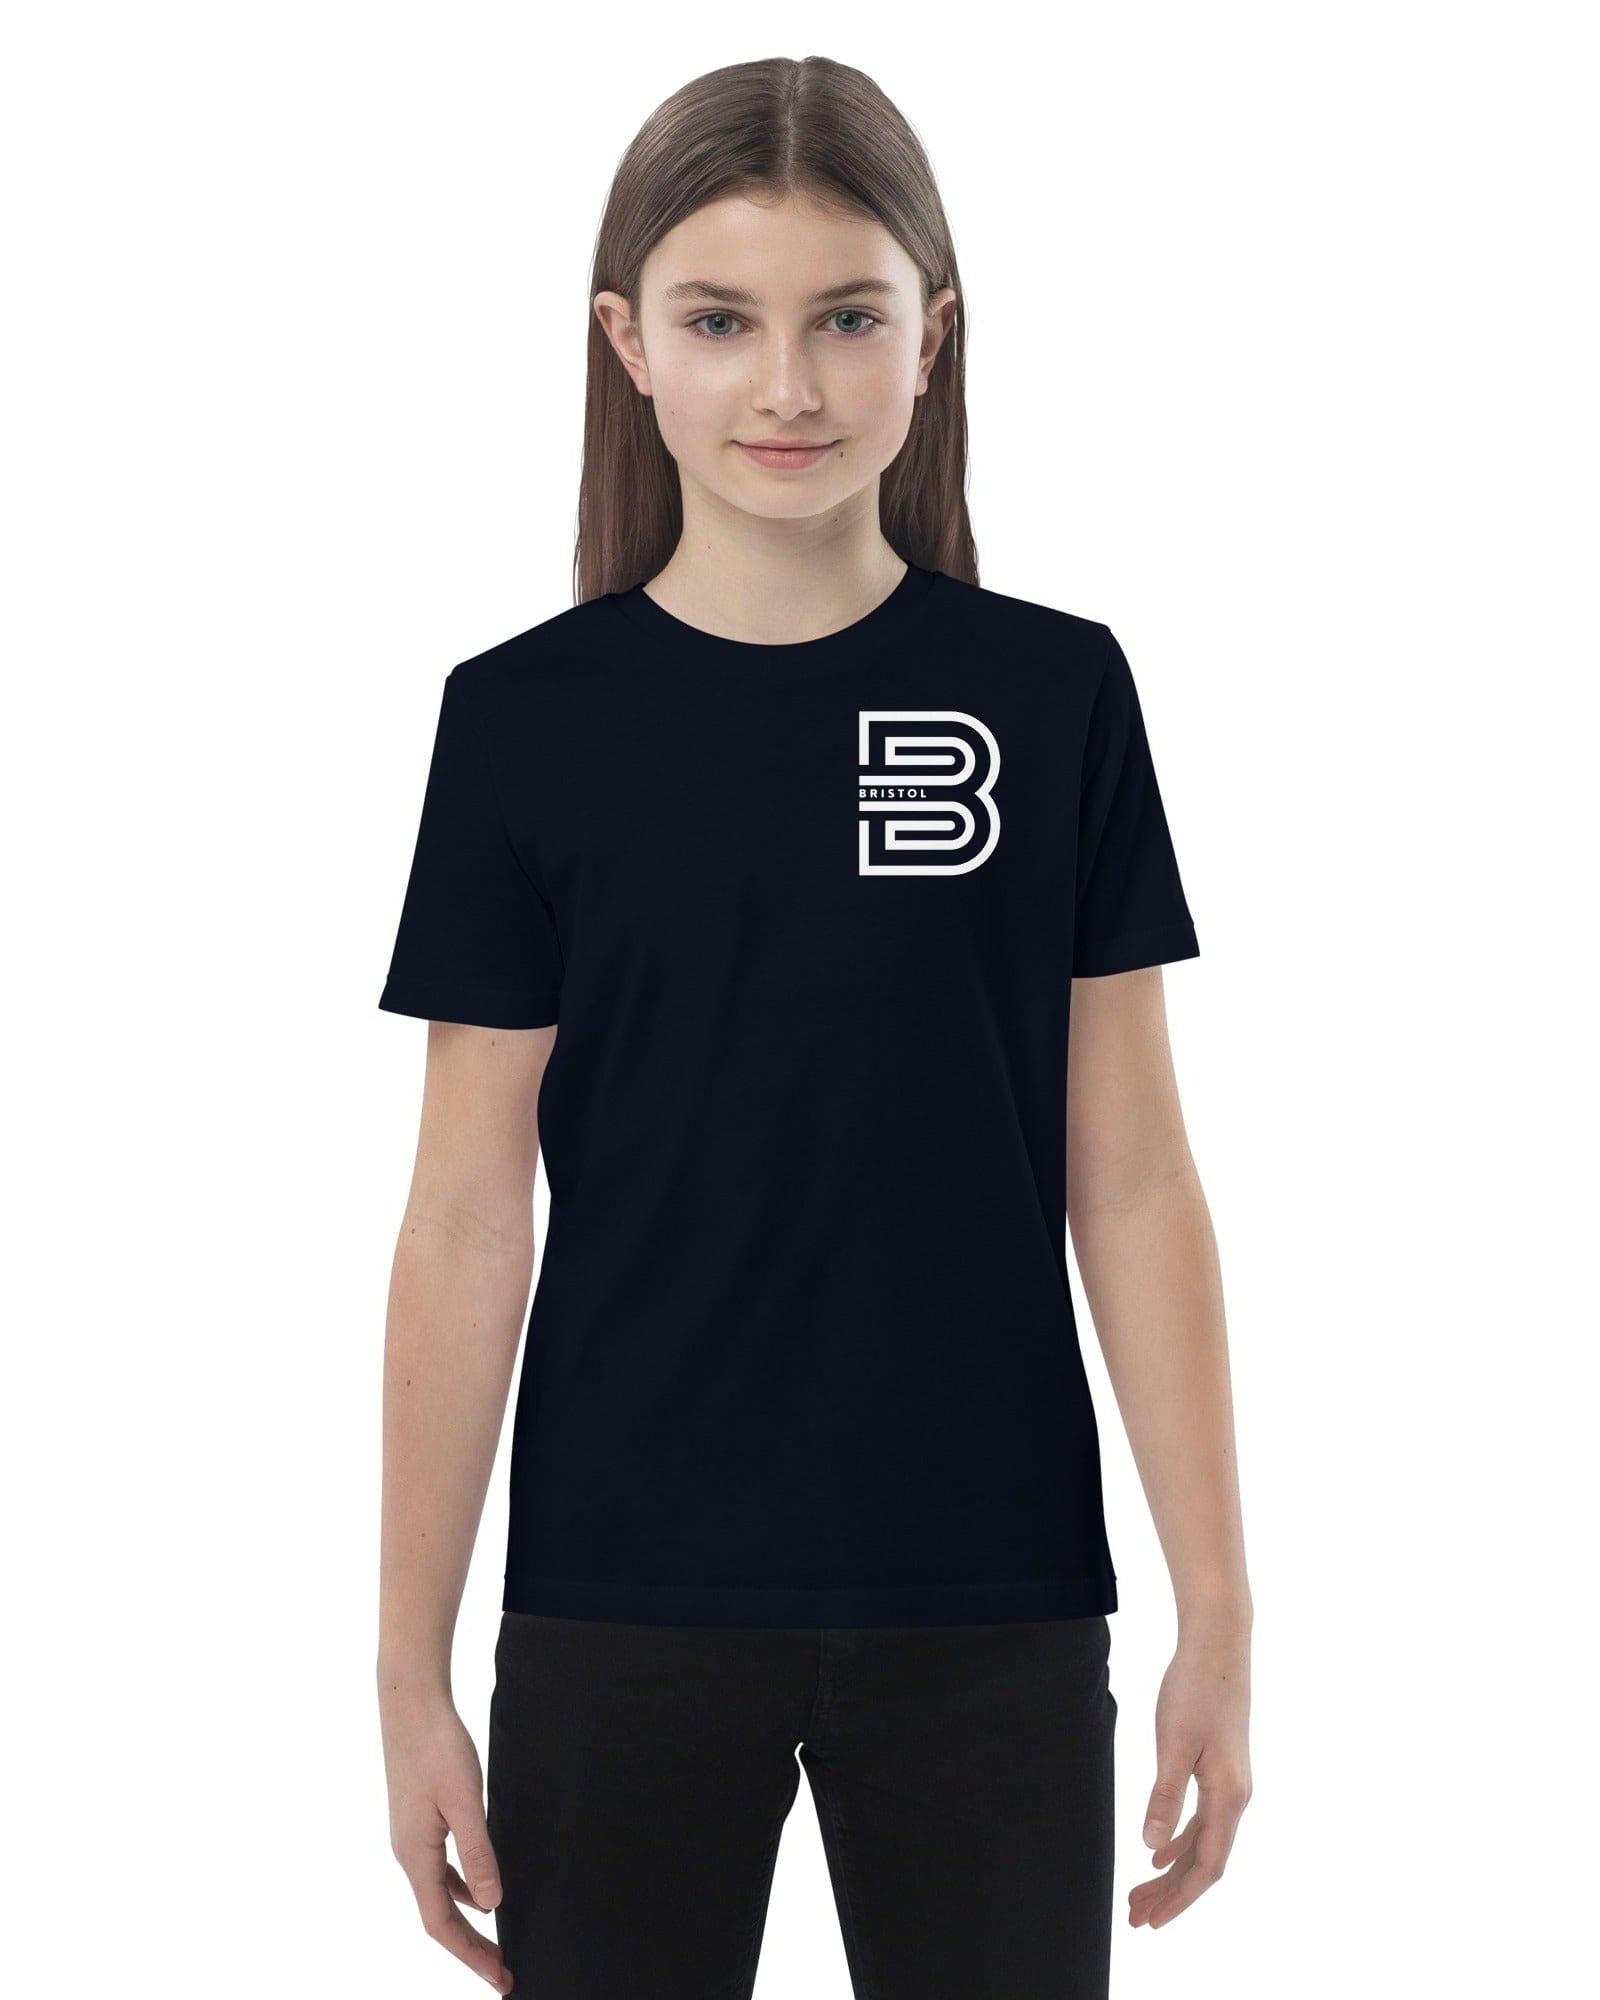 Bristol B Kids T-shirt | Organic Cotton Shirts & Tops Jolly & Goode